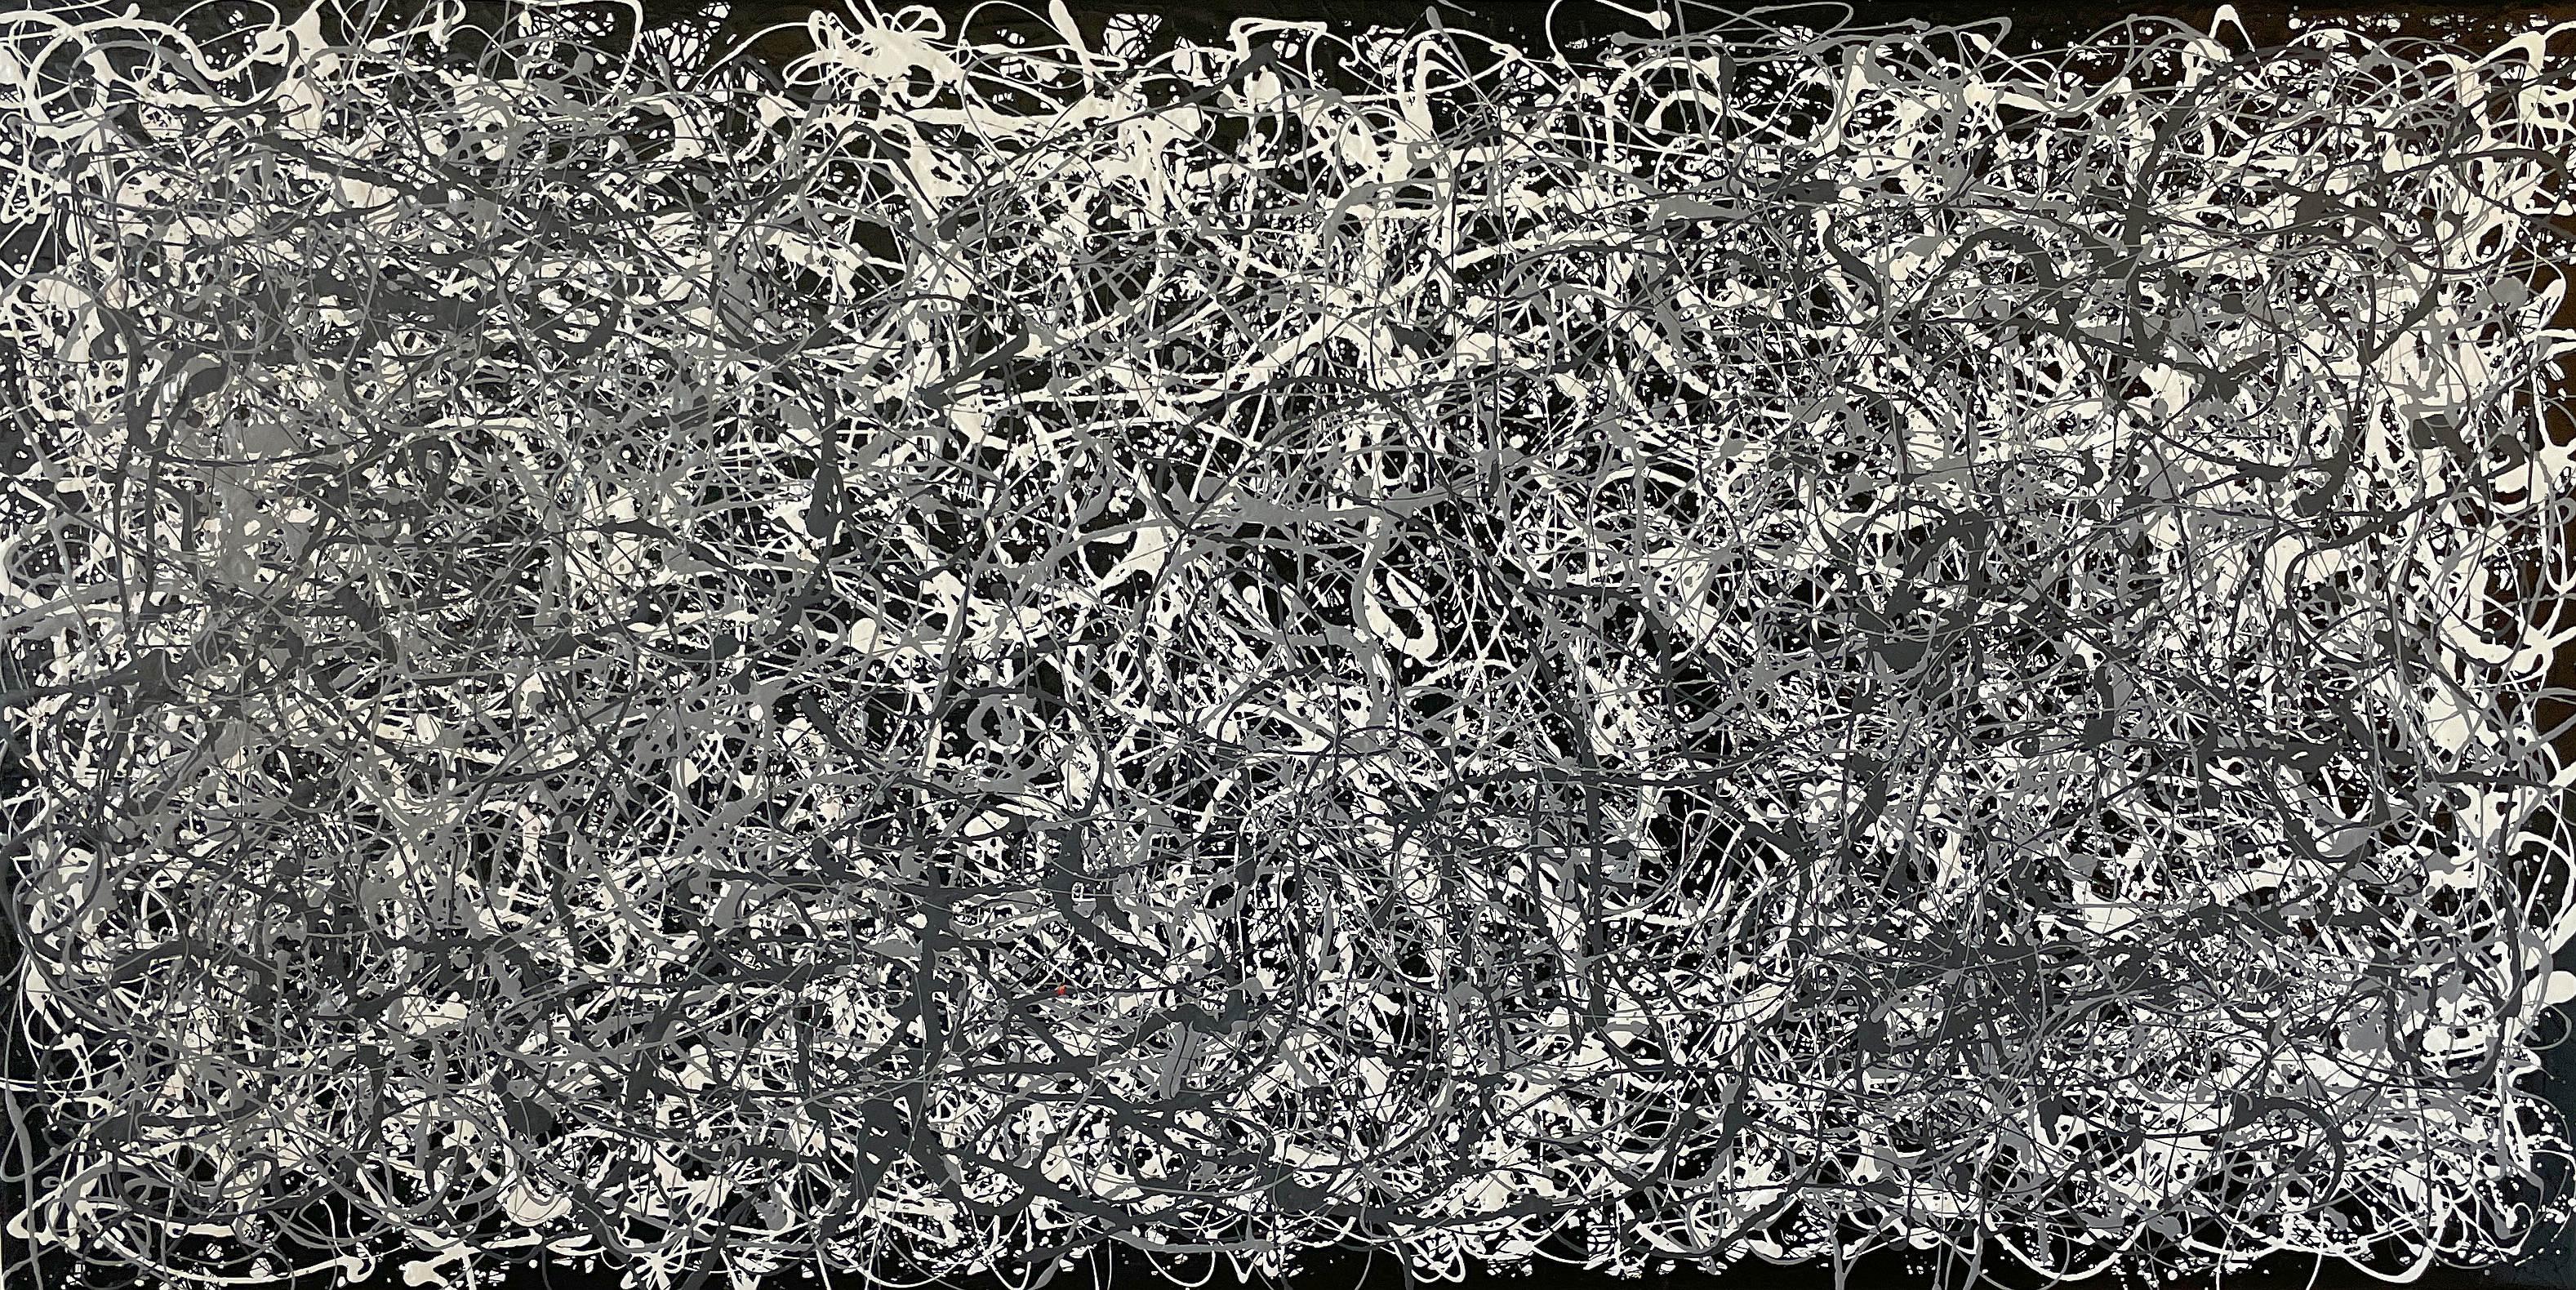 Dance of Shadows - Gray Abstract Painting by Juan Jose Garay